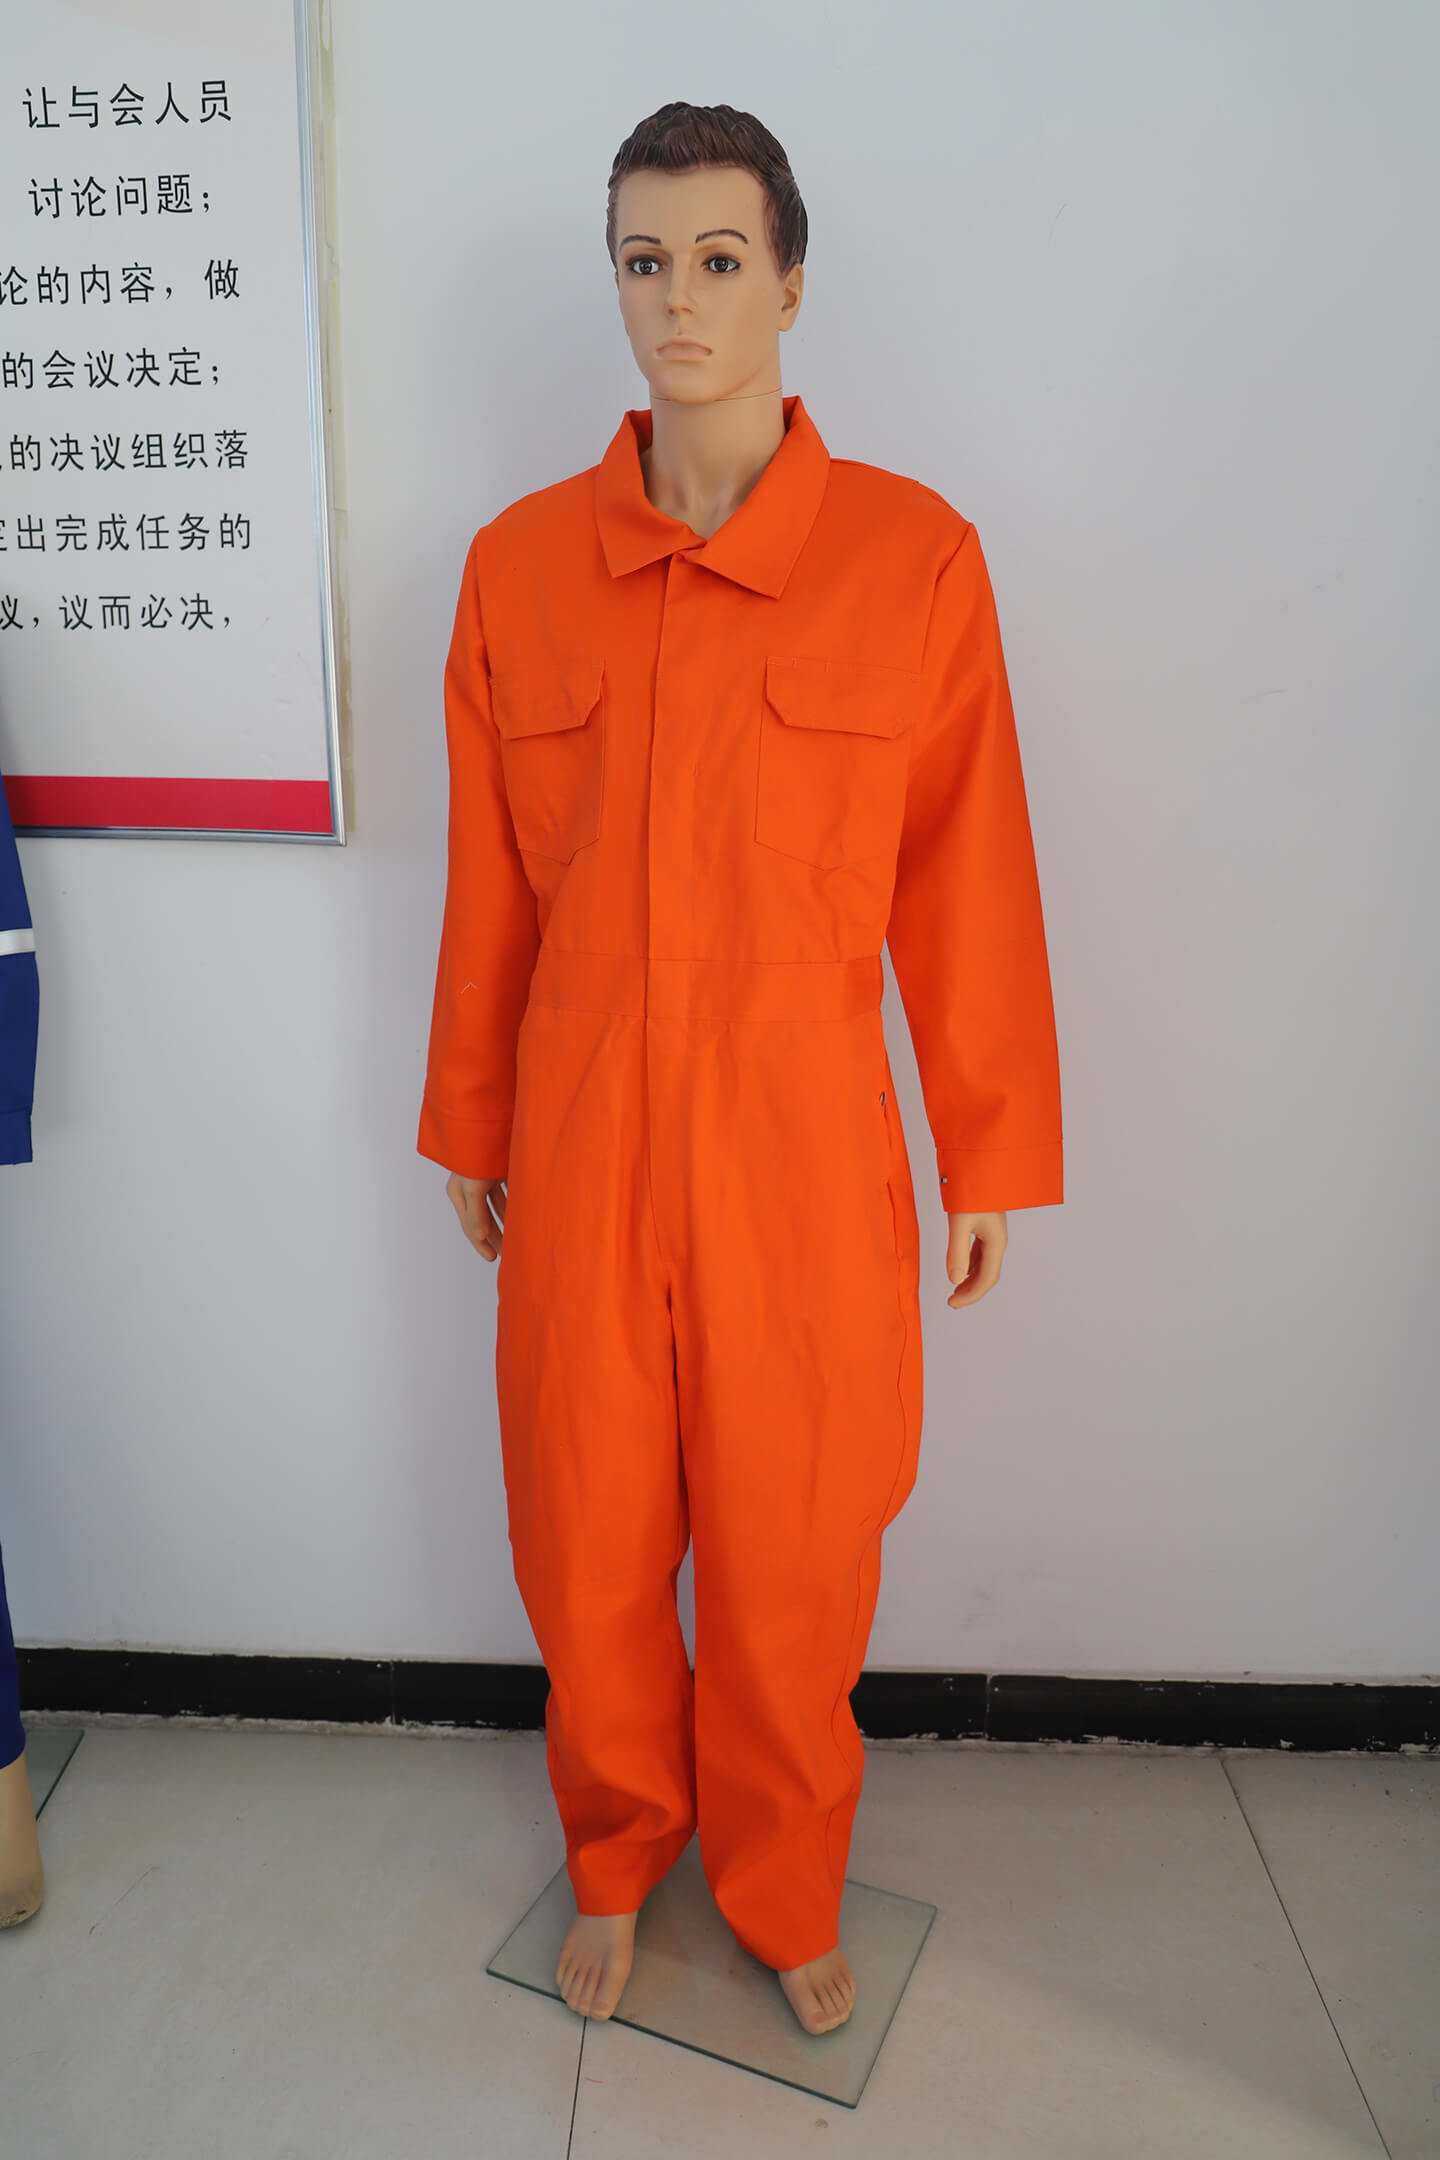 Orange working clothes